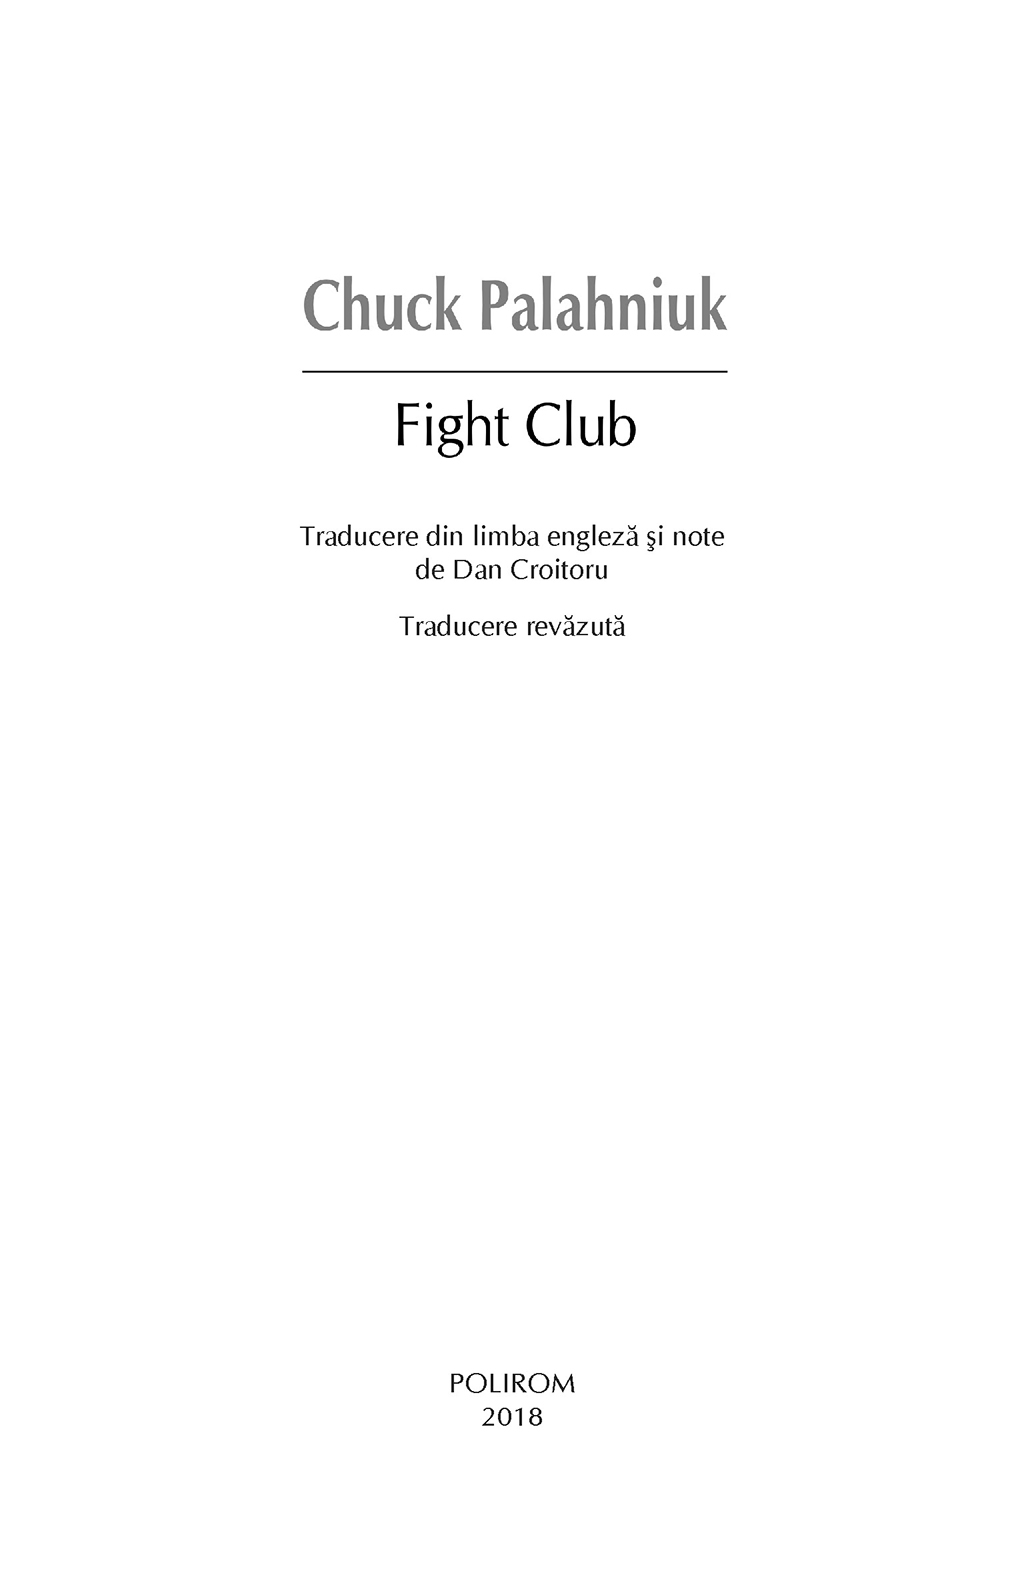 Chuck Palahniuk: Fight Club (French language, 1999, Gallimard)